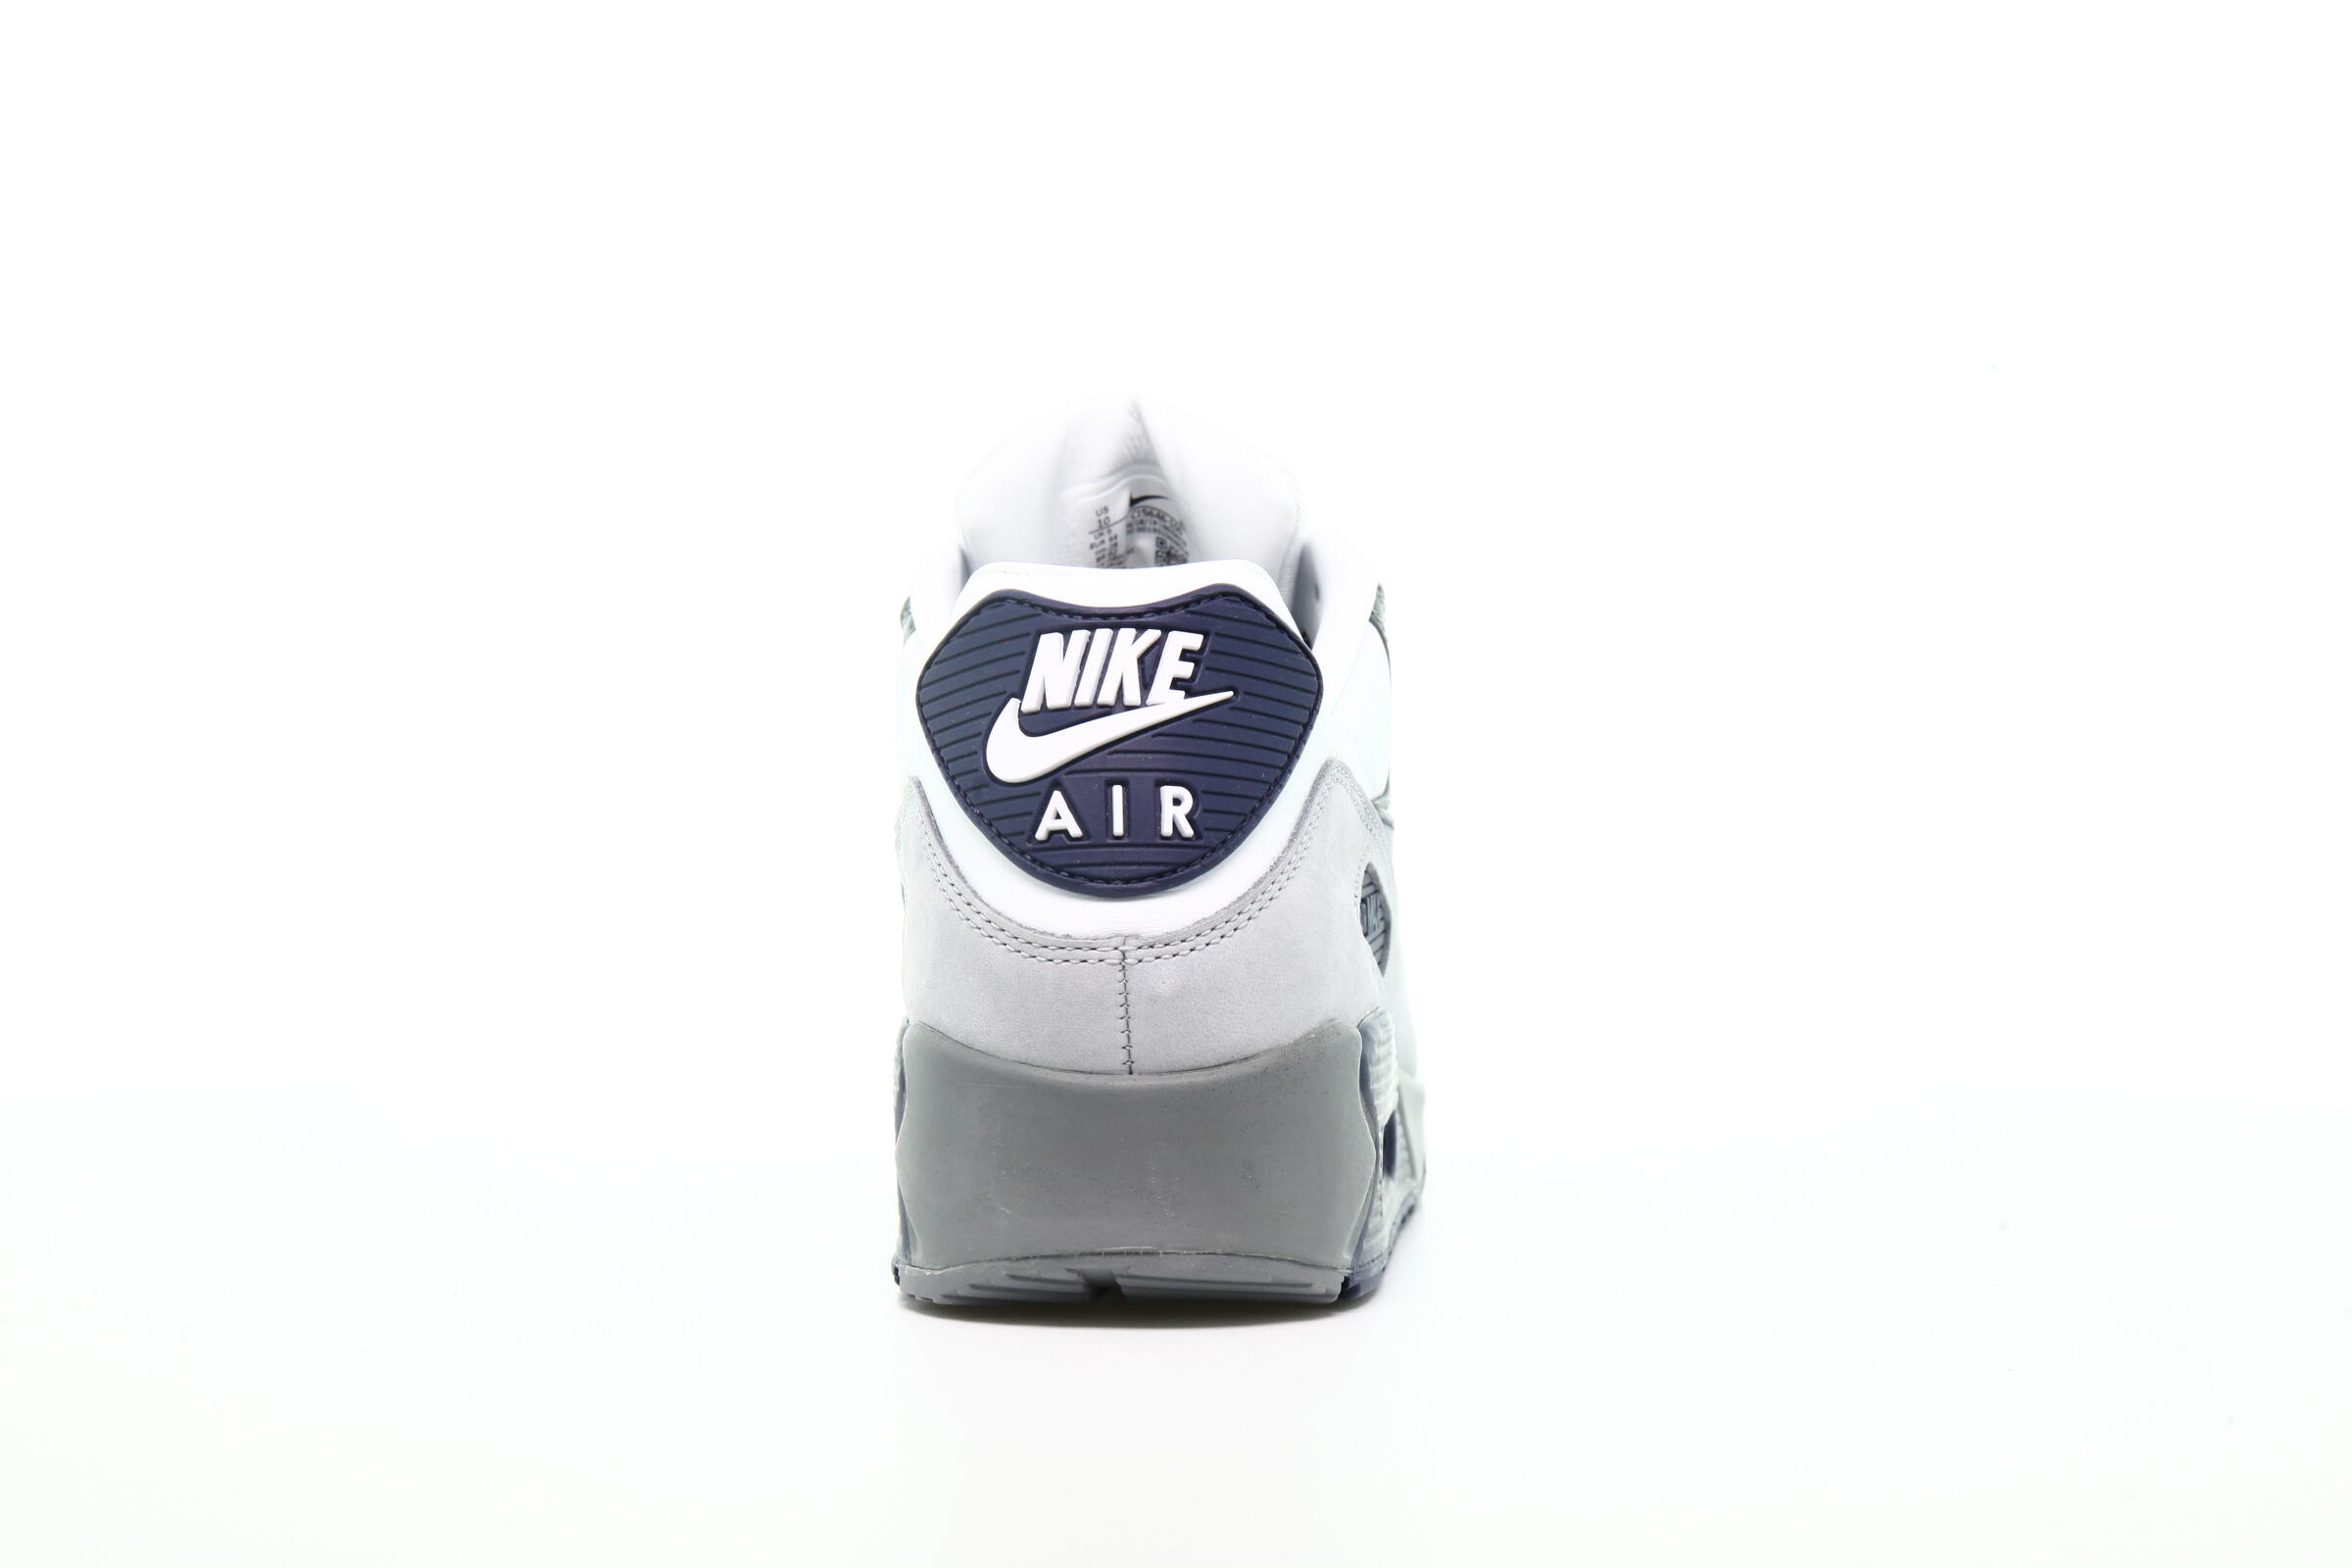 Nike Air Max 90 NRG "Smoke Grey"